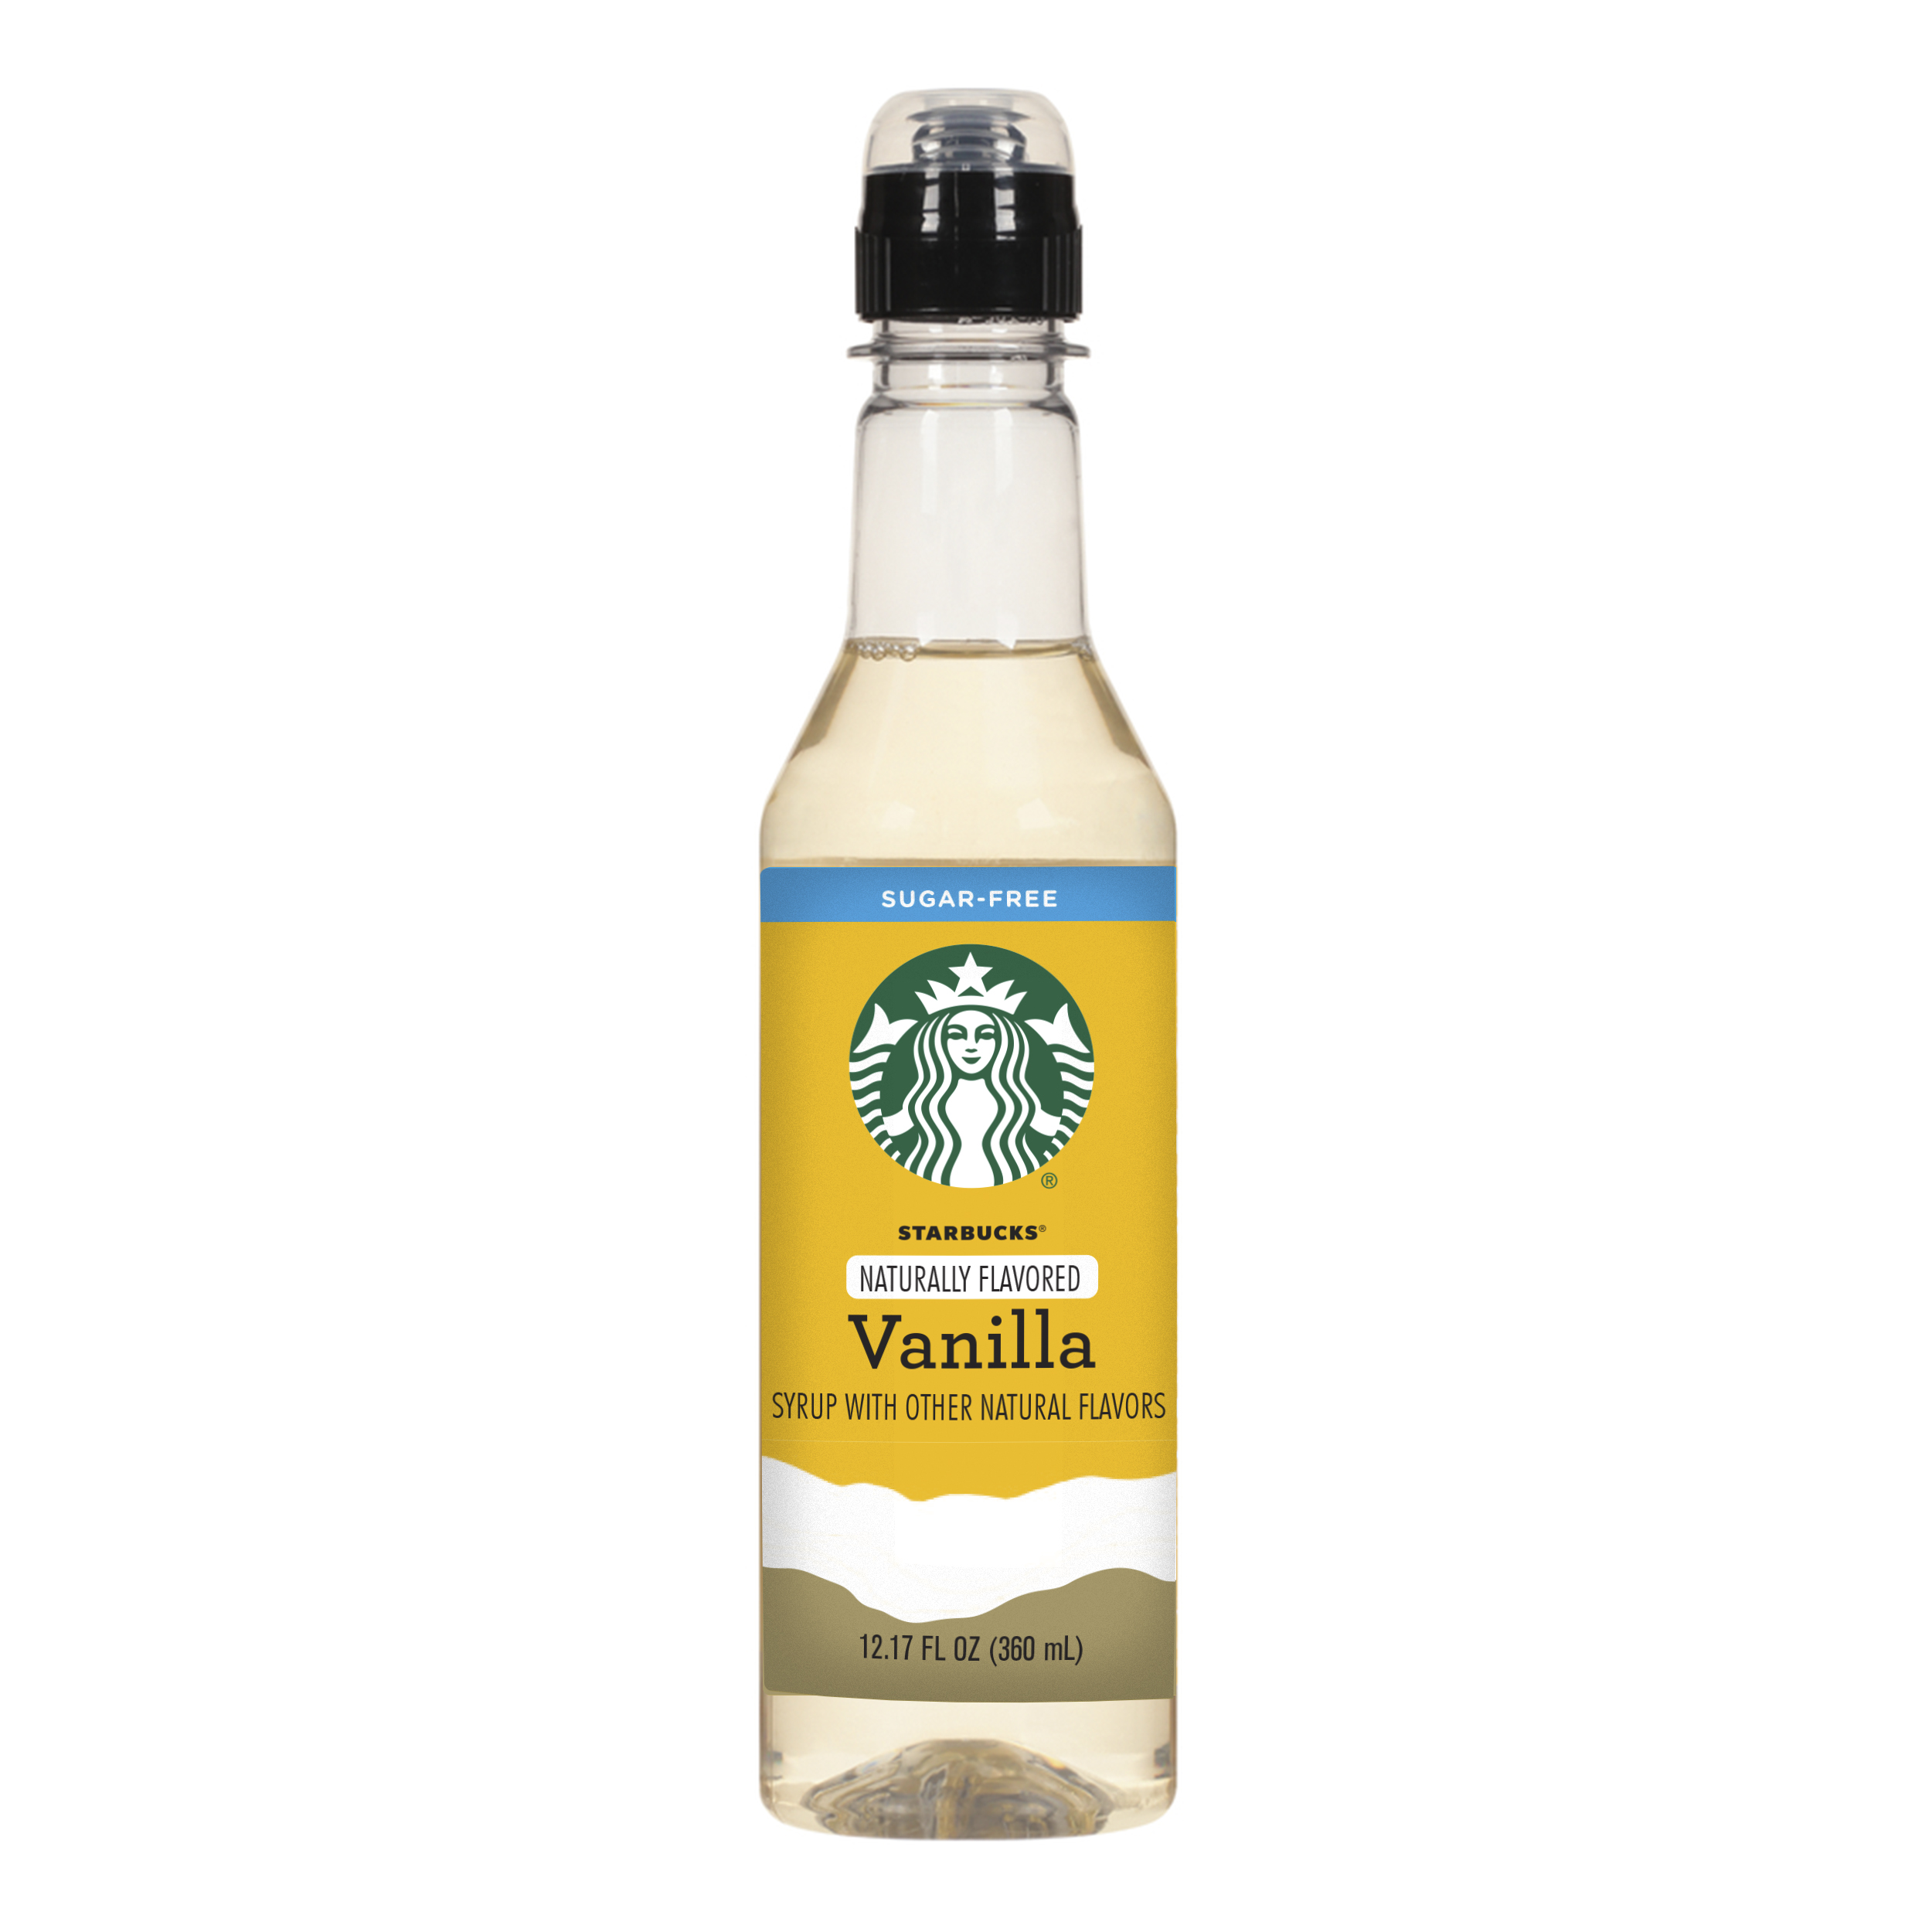 Starbucks Naturally Flavored Sugar-Free Vanilla Coffee Syrup, 12.7 fl Oz - image 1 of 7